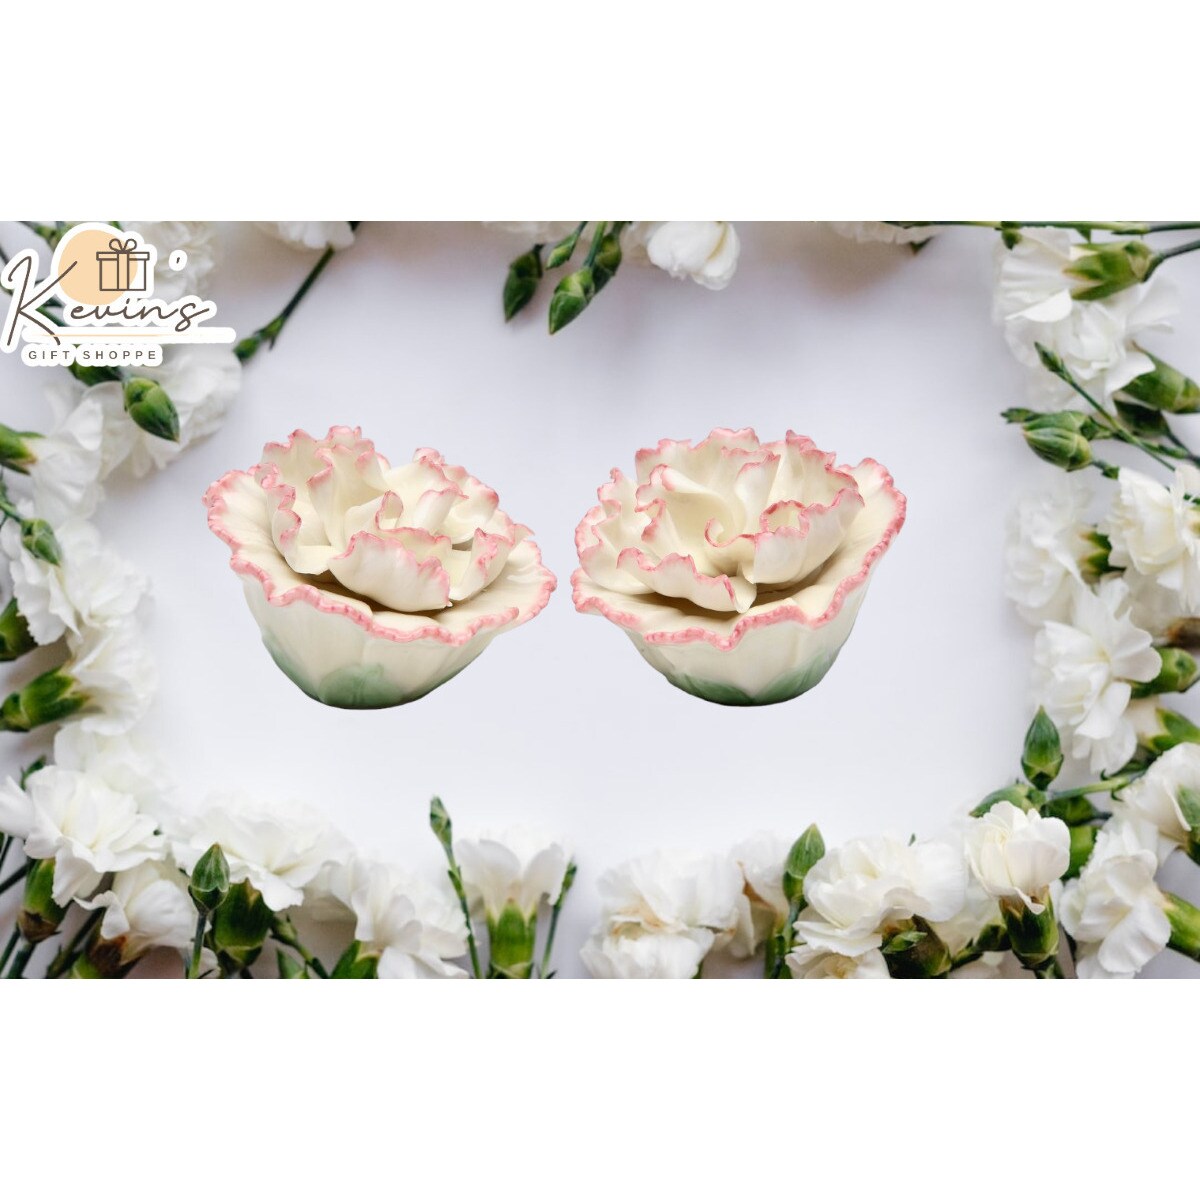 kevinsgiftshoppe Ceramic Carnation Flower Salt and Pepper Shakers Home Decor   Kitchen Decor